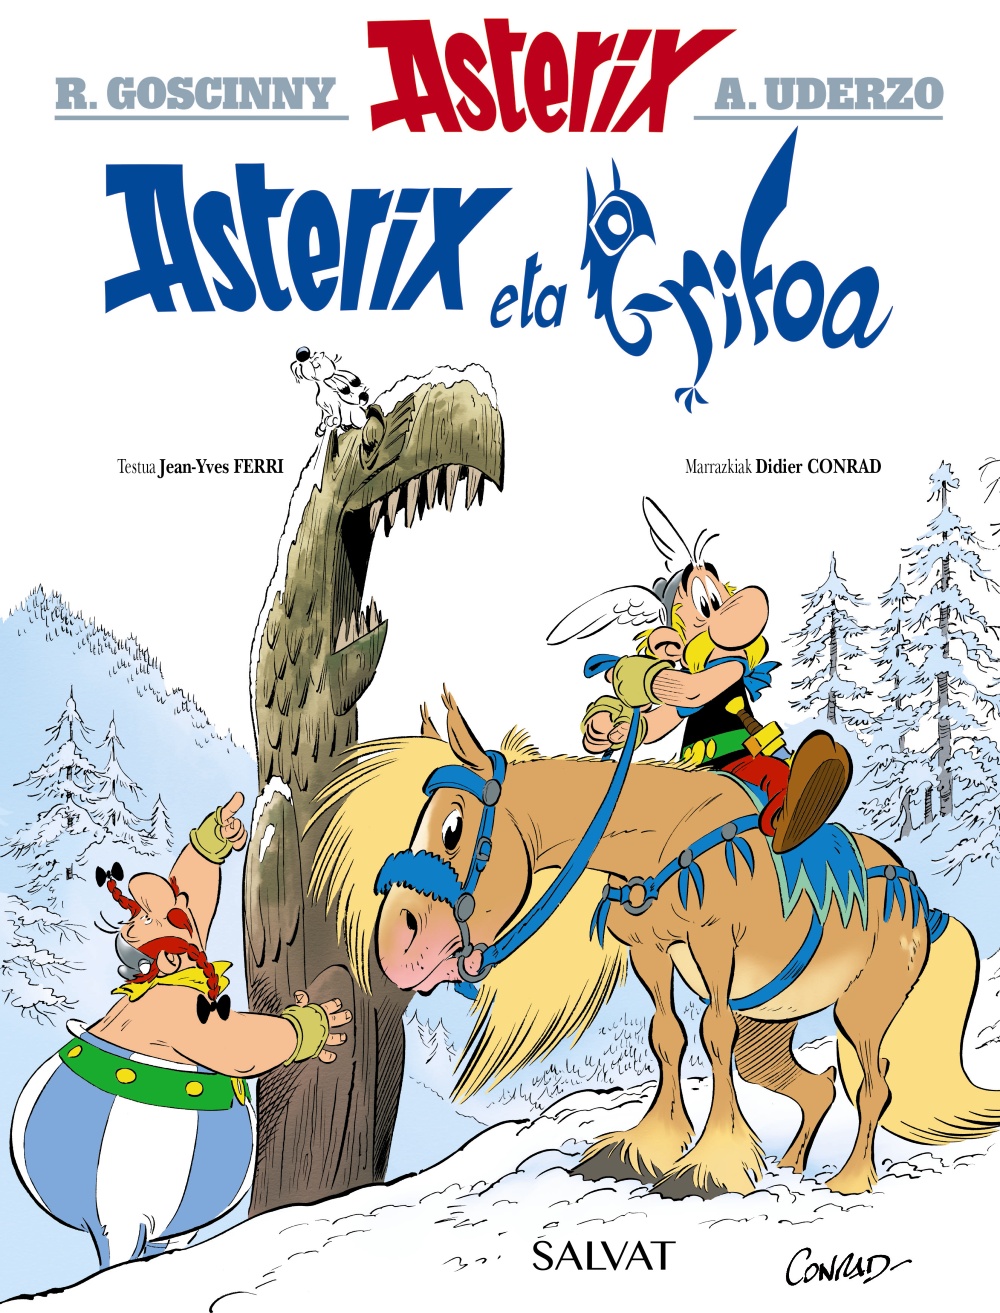 Asterixen album berria, euskaraz ere bai